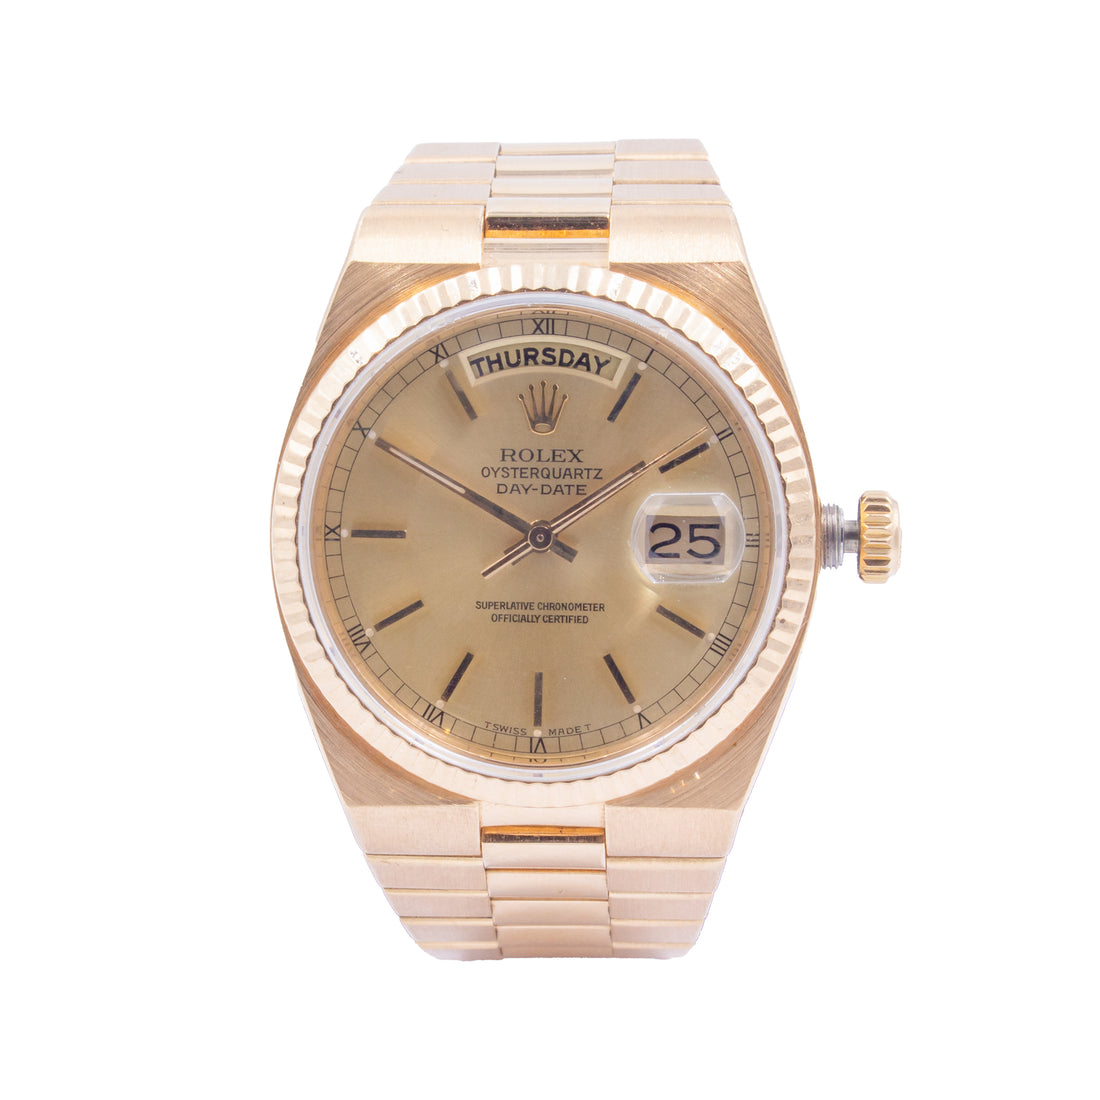 Reloj Rolex OysterQuartz Day-Date para Caballero 